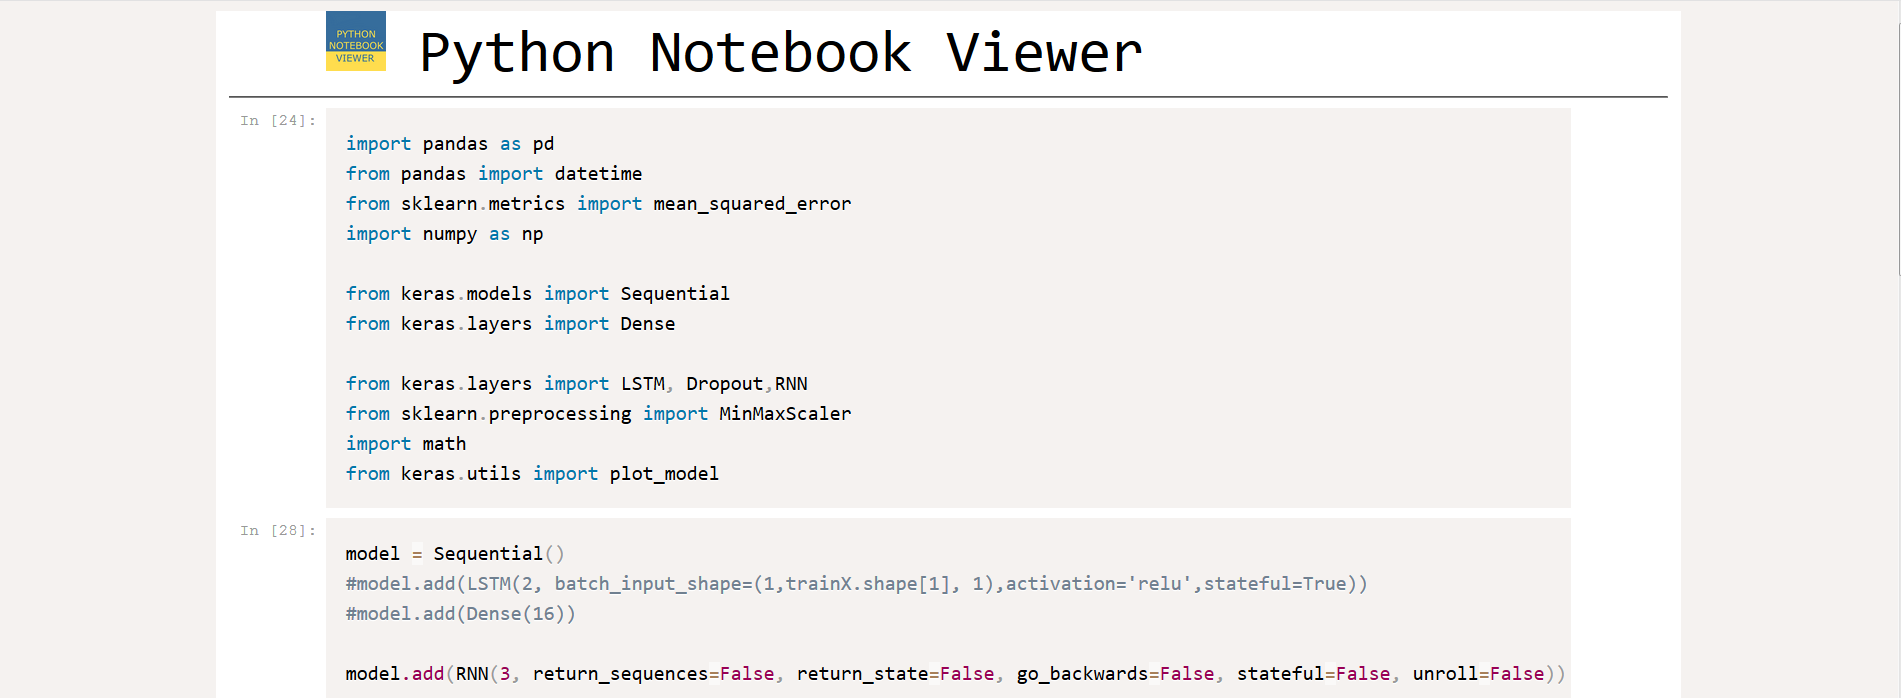 Python Notebook Viewer